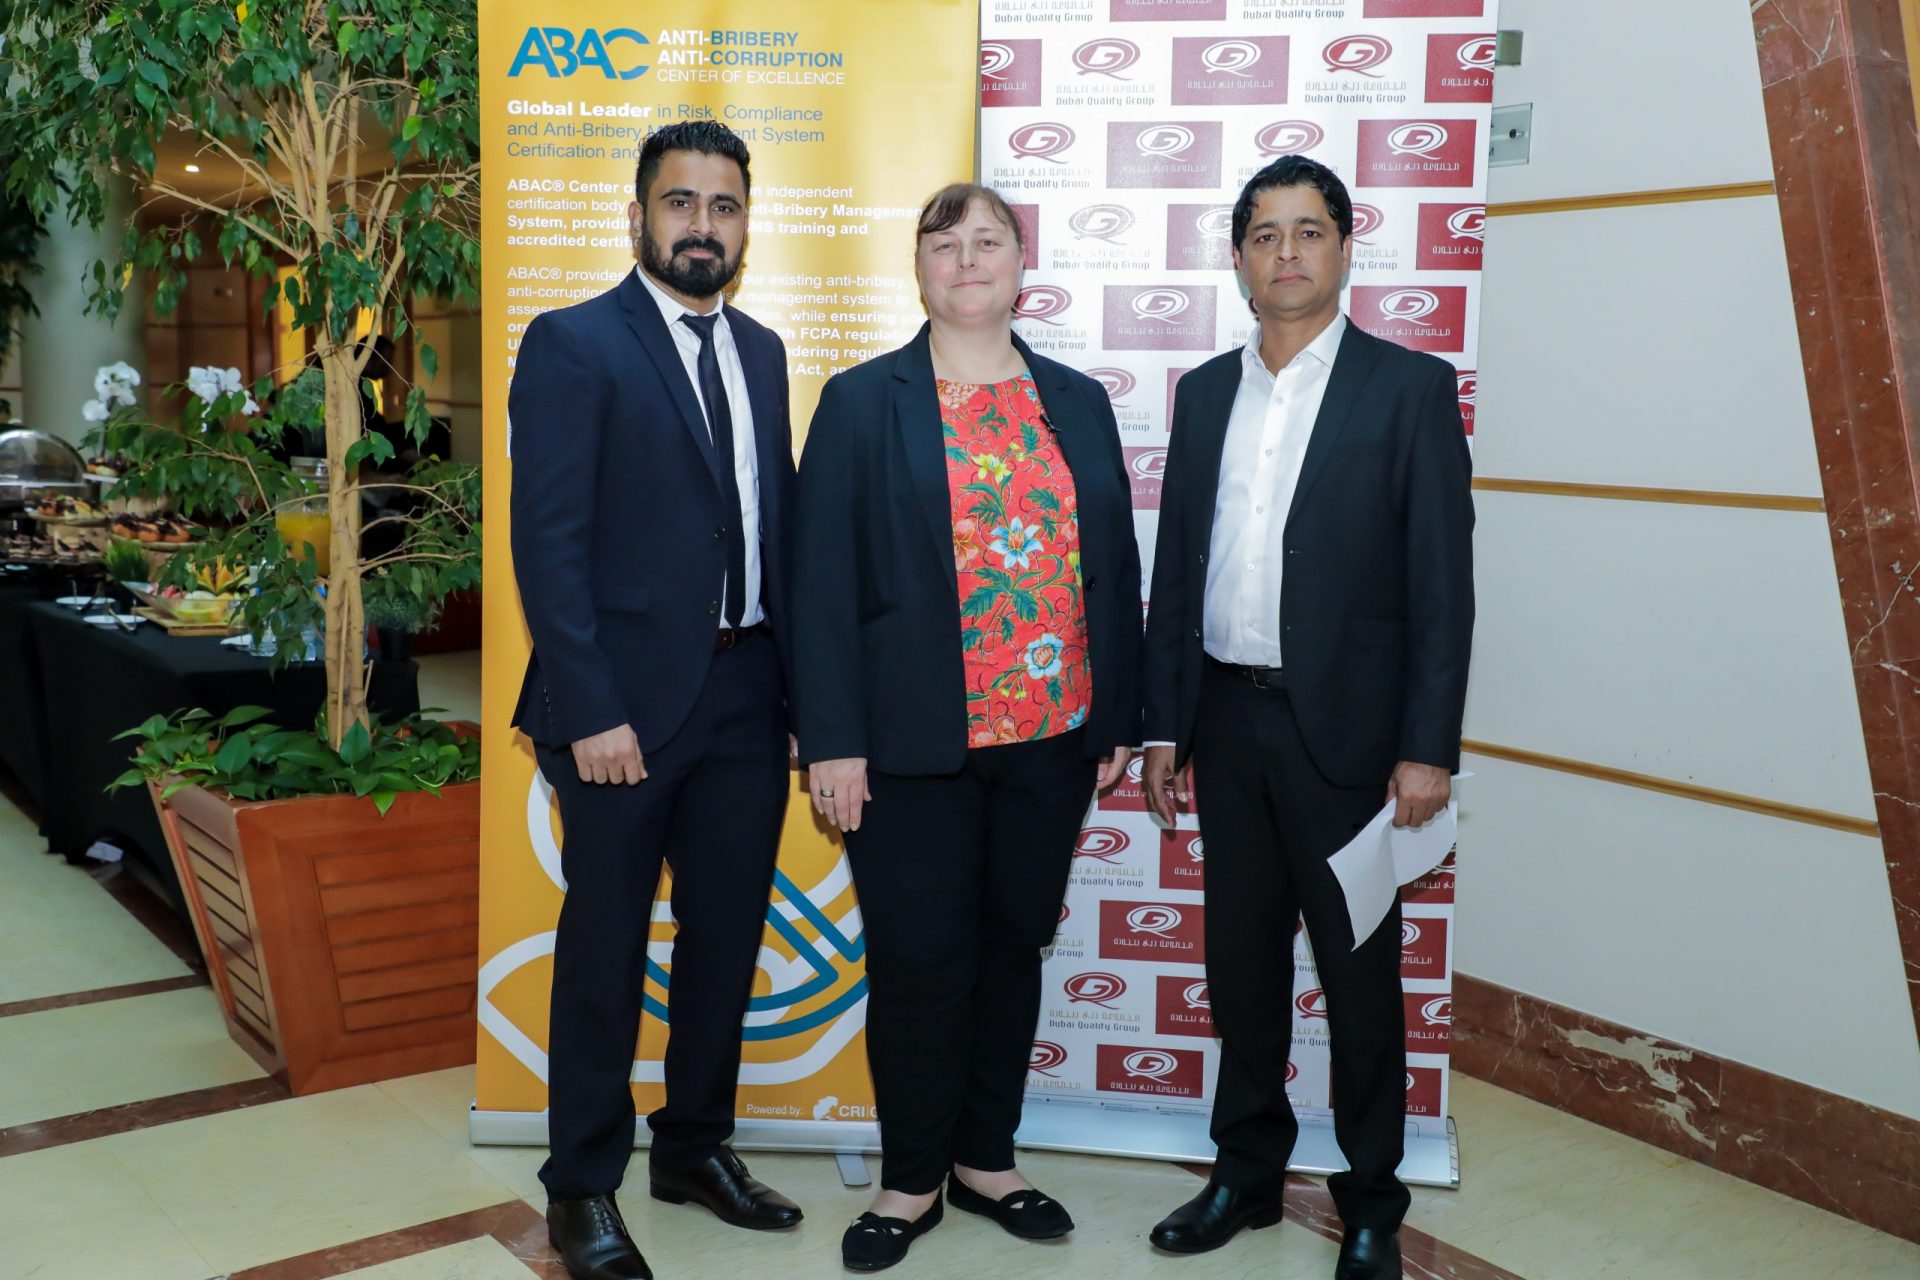 ABAC® training held for 2019 International Anti-Corruption Day